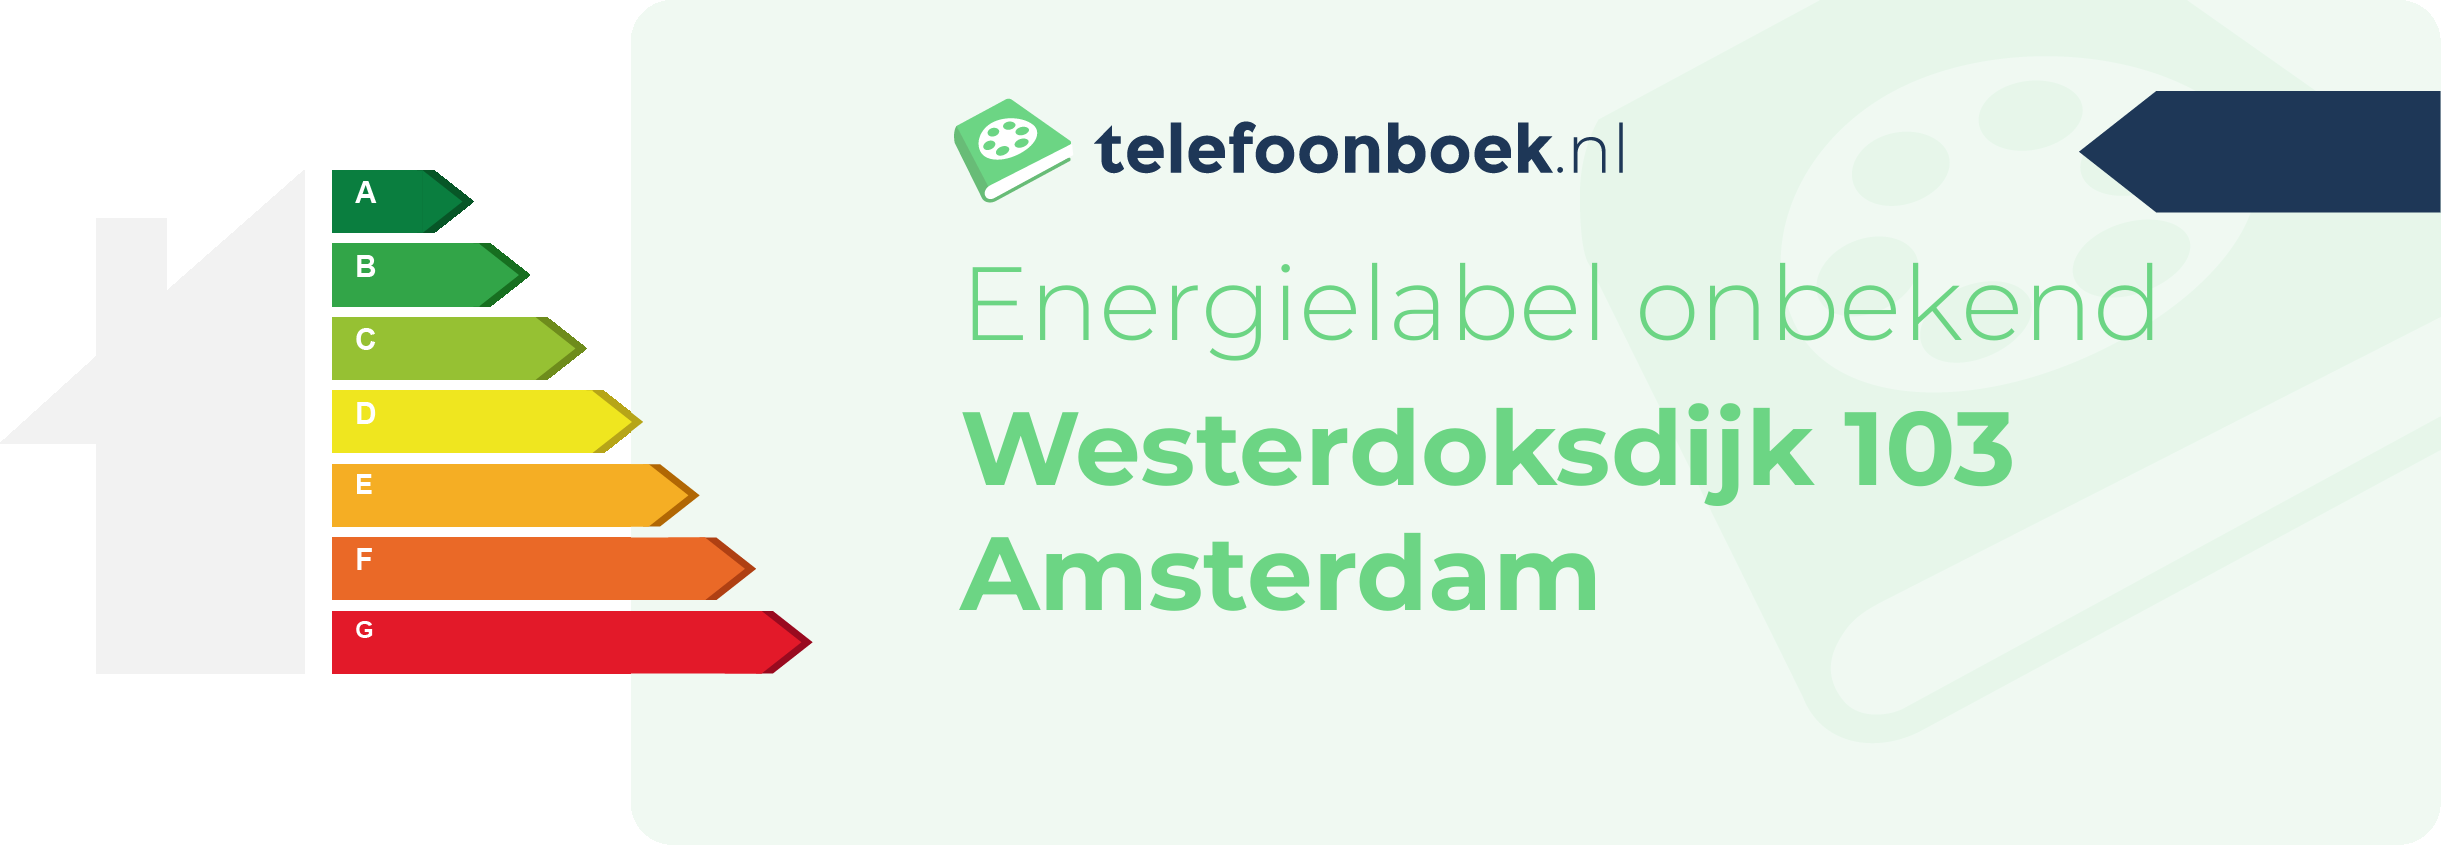 Energielabel Westerdoksdijk 103 Amsterdam